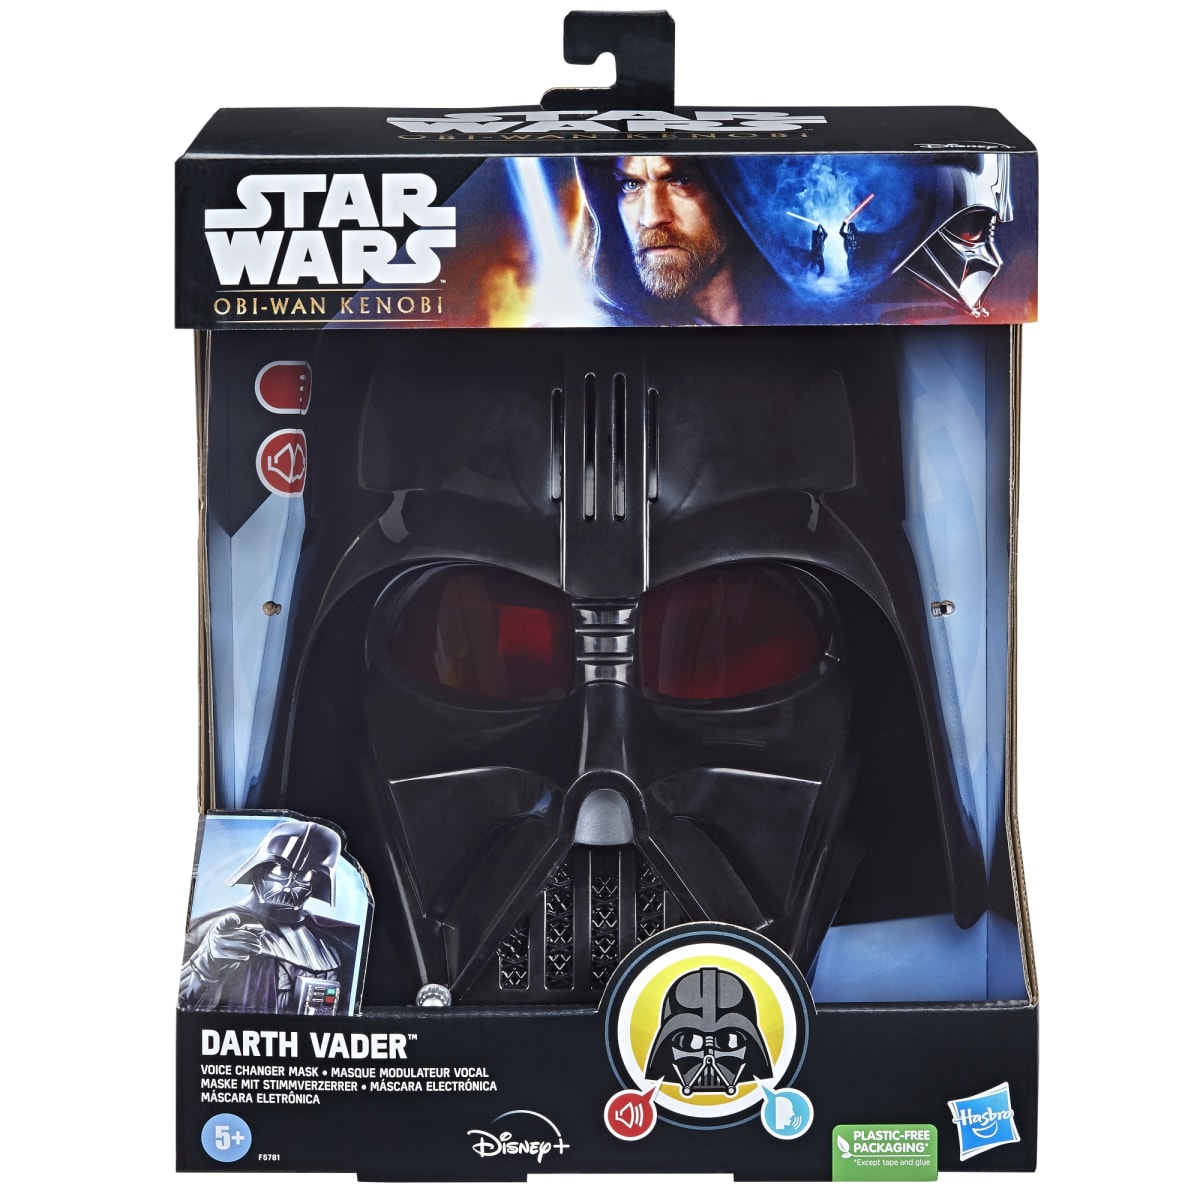 Star Wars Darth Vader Feature maski  verkkokauppa